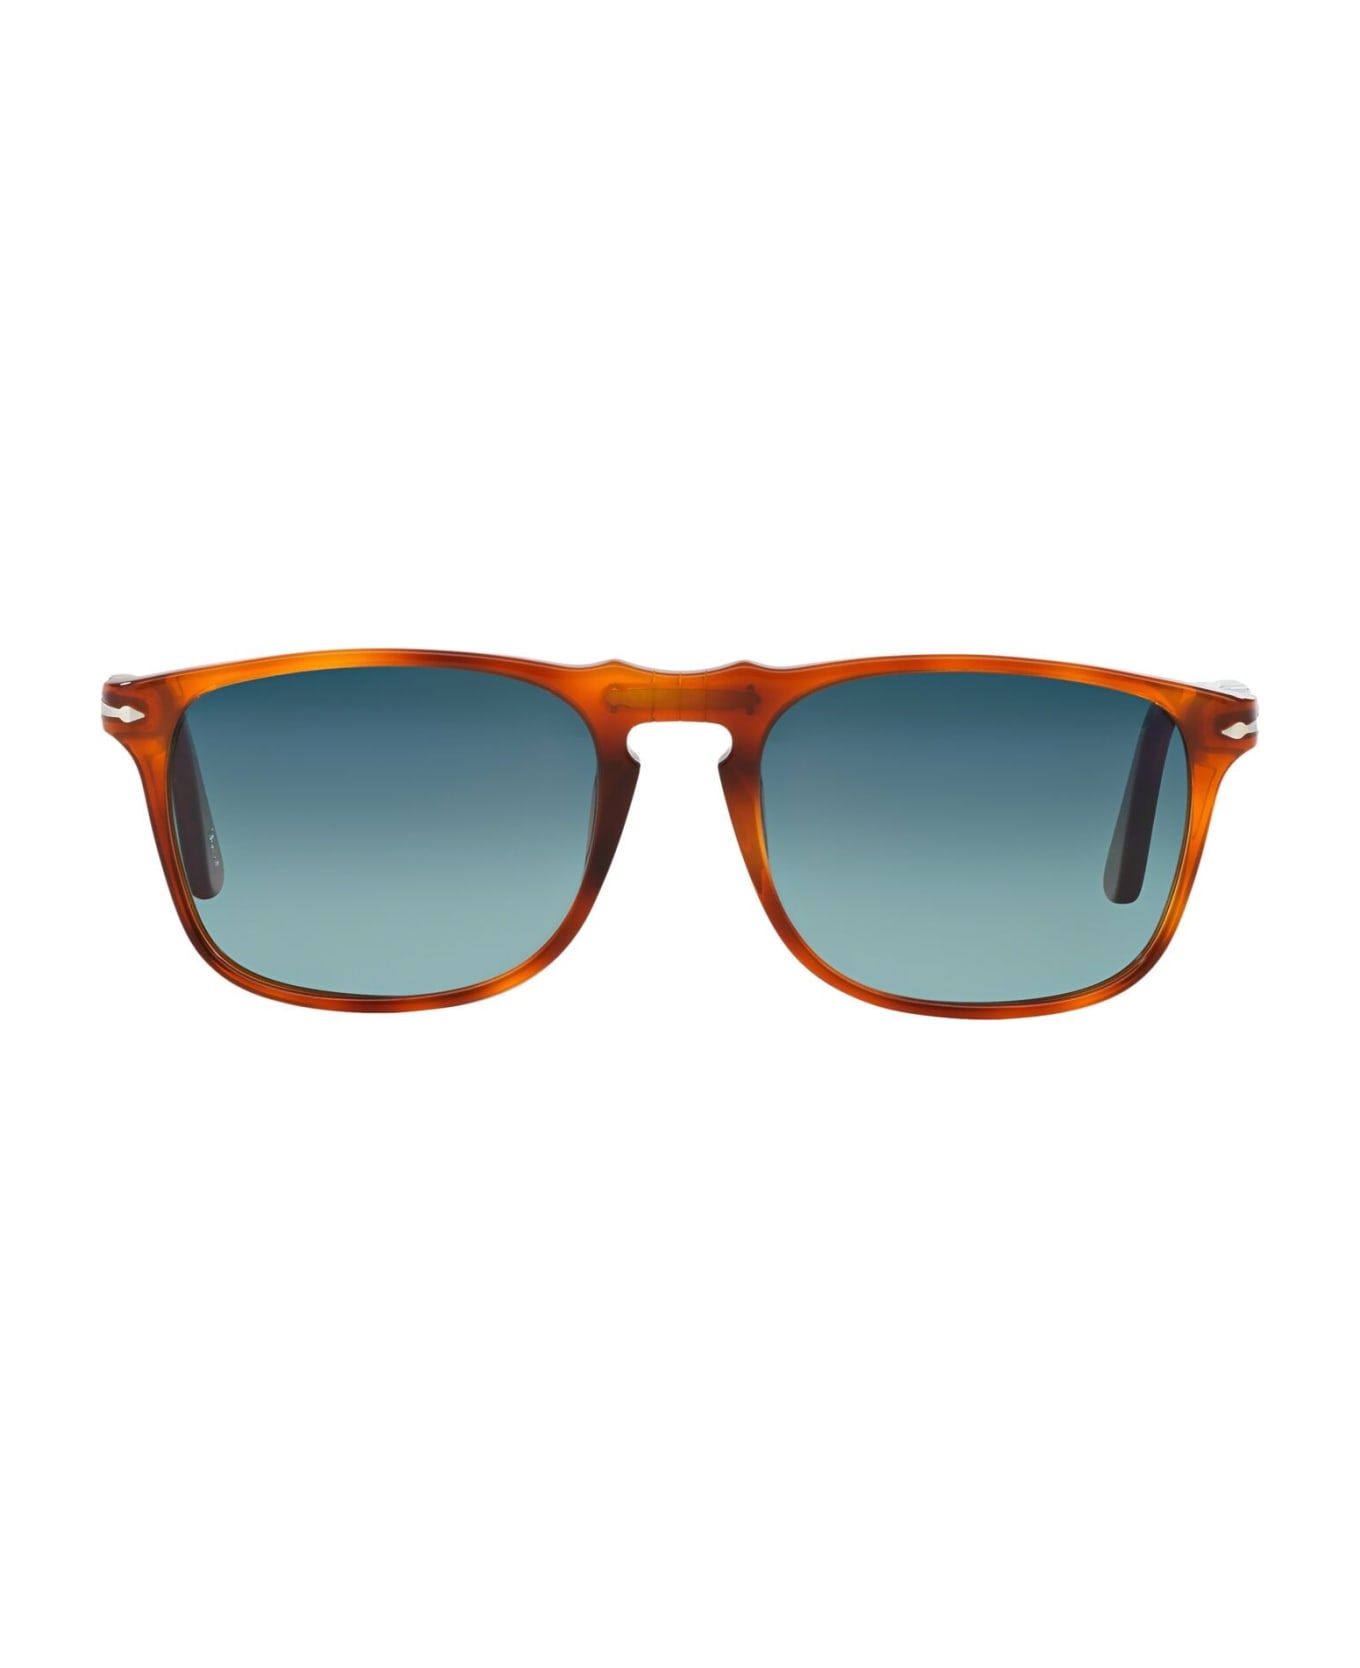 Persol Eyewear - Terra di Siena/Blu Sfumato polarizzato アイウェア